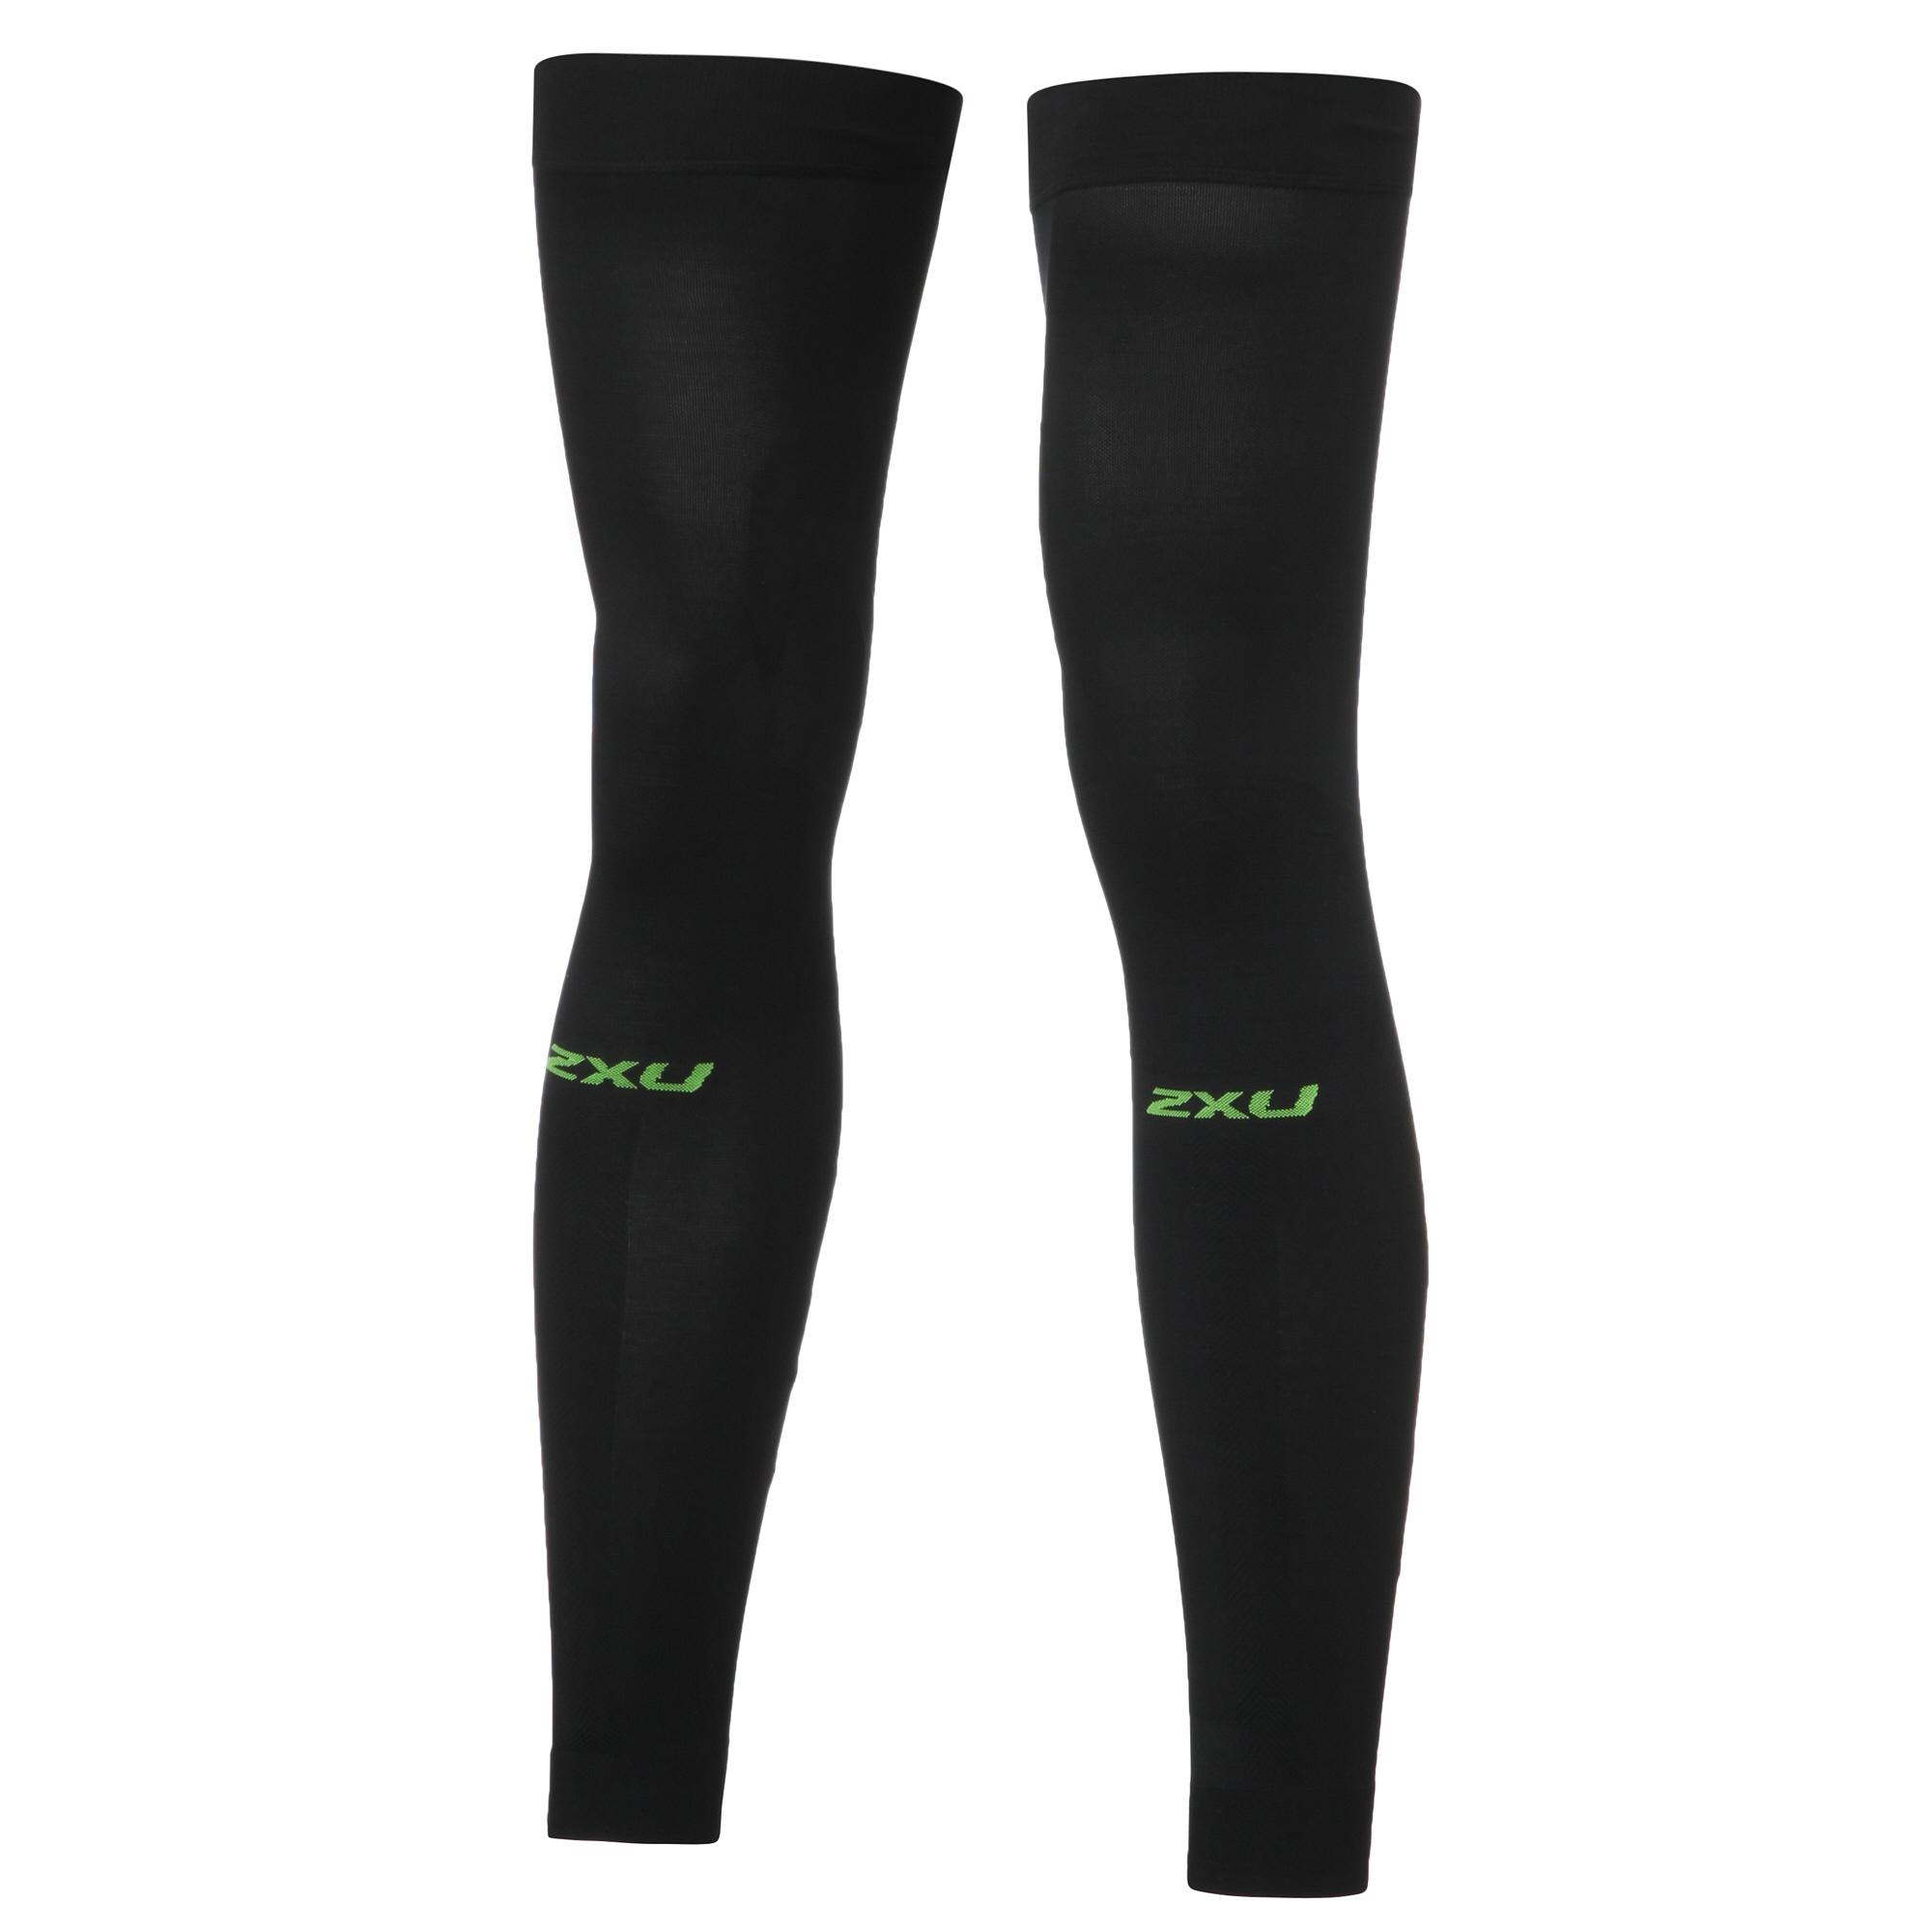 2xu Flex Recovery Compression Leg Sleeves - Black/nero